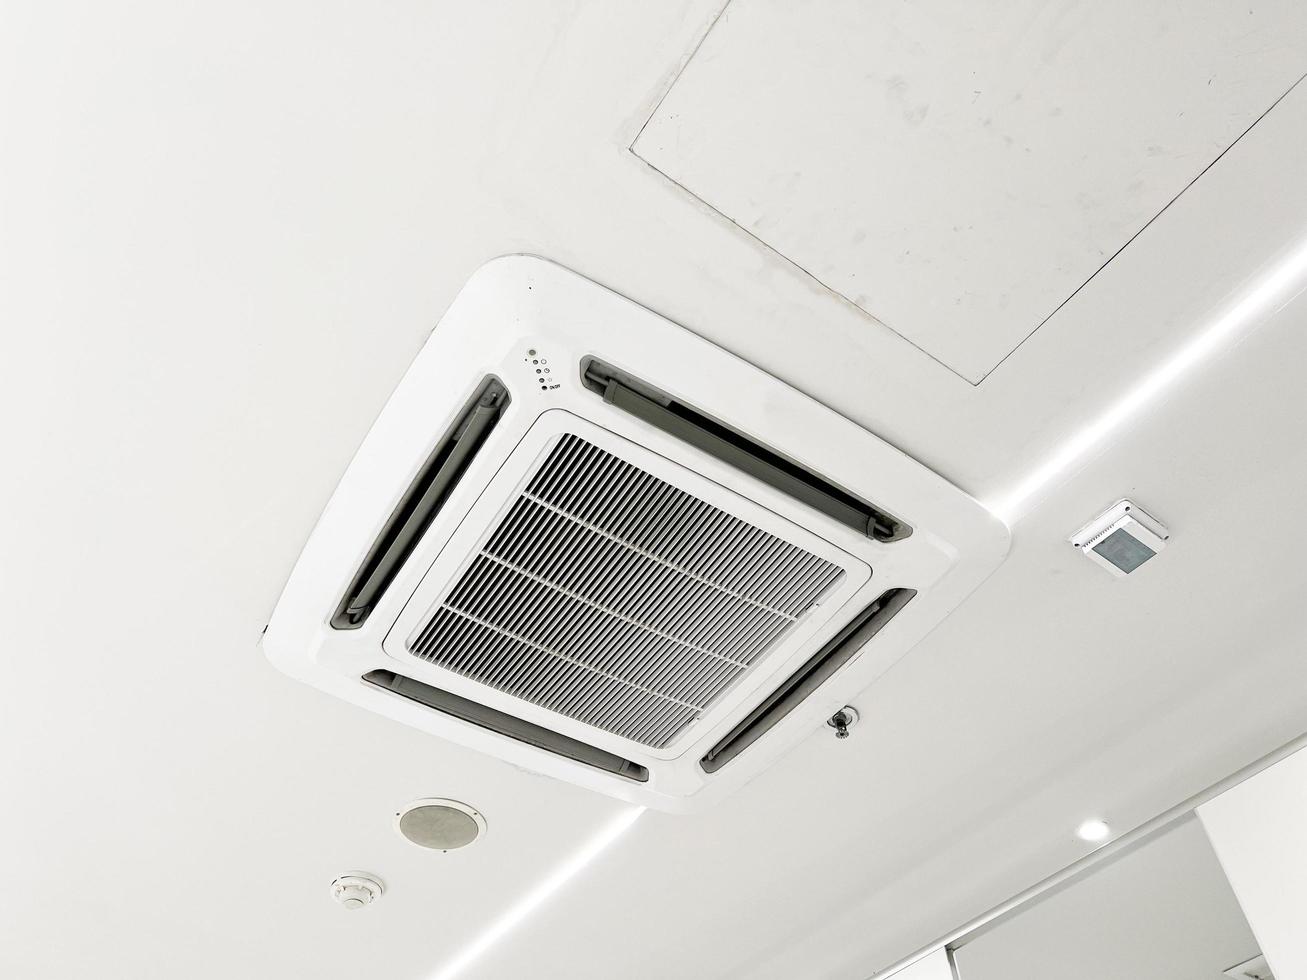 condicionador de ar tipo cassete montado no teto e luz de lâmpada moderna no teto branco. ar condicionado de duto para casa ou escritório foto